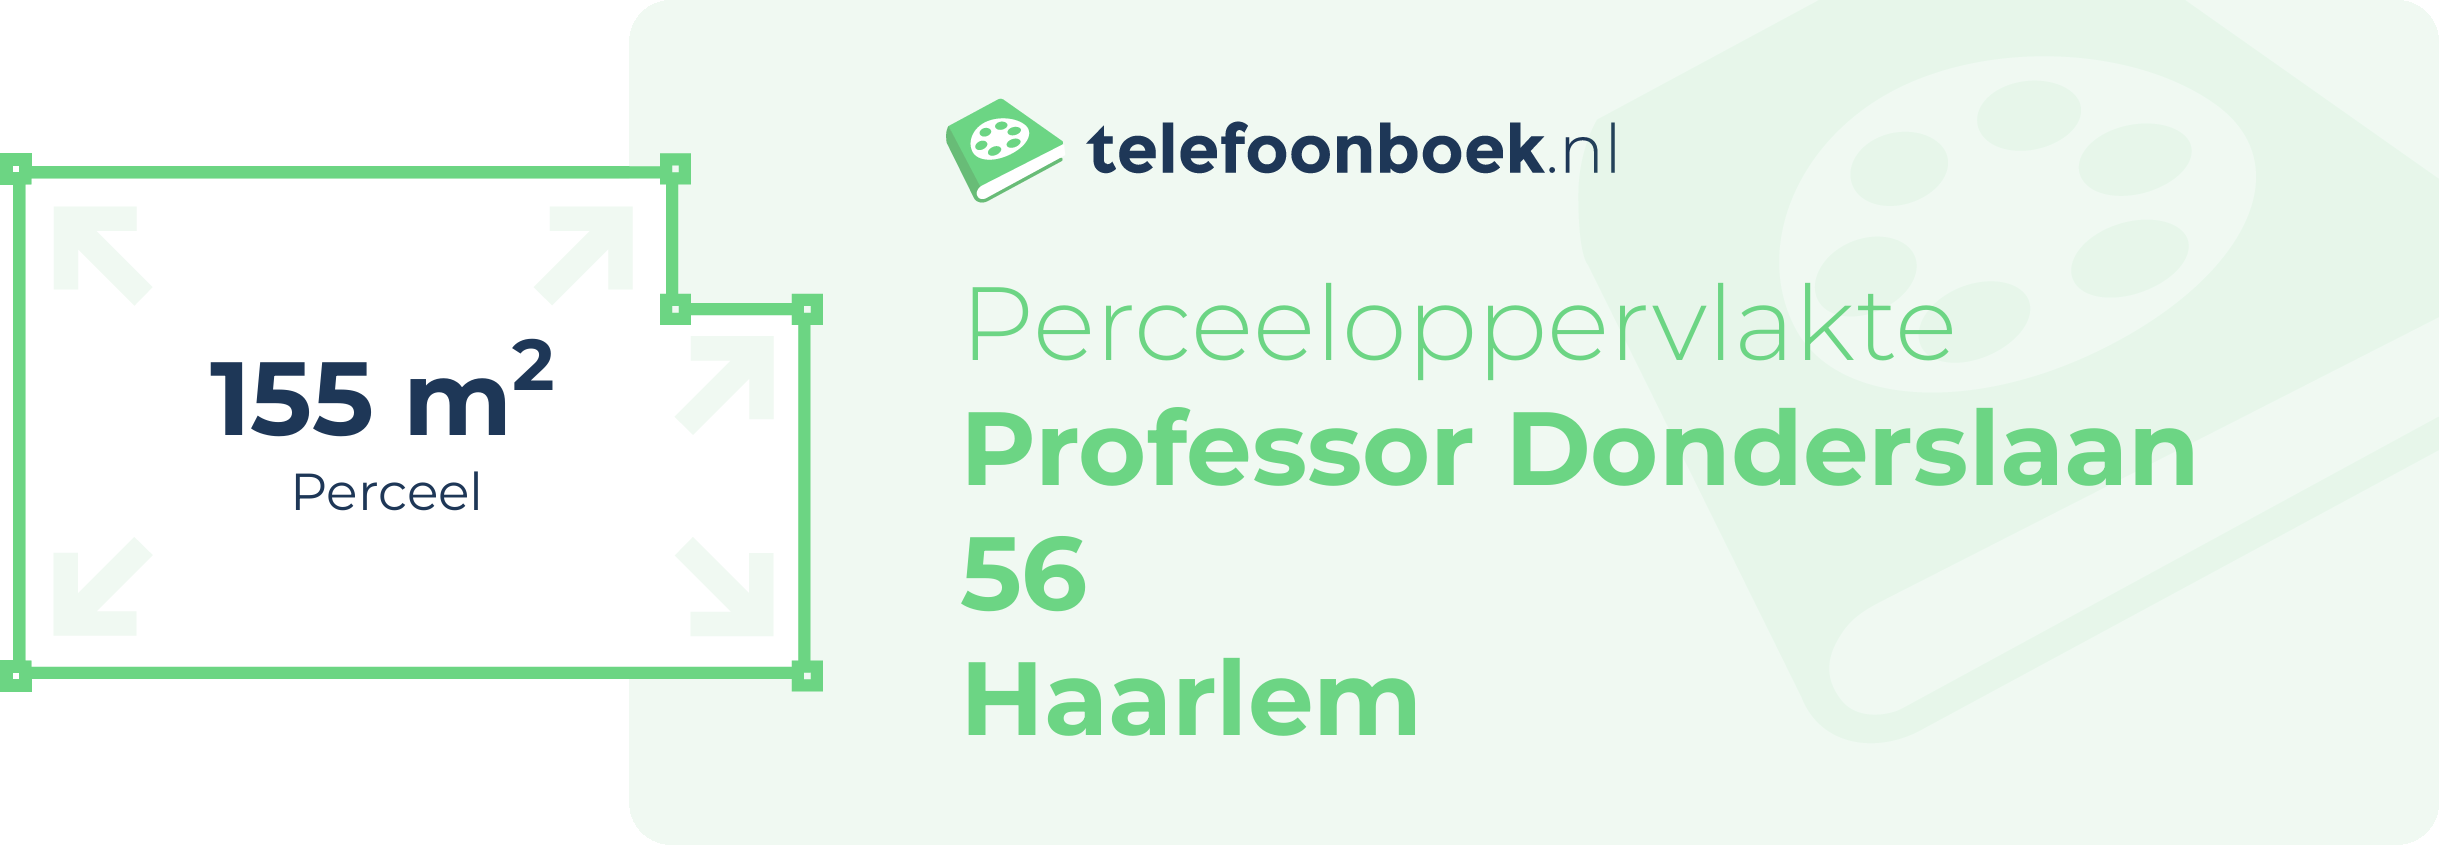 Perceeloppervlakte Professor Donderslaan 56 Haarlem